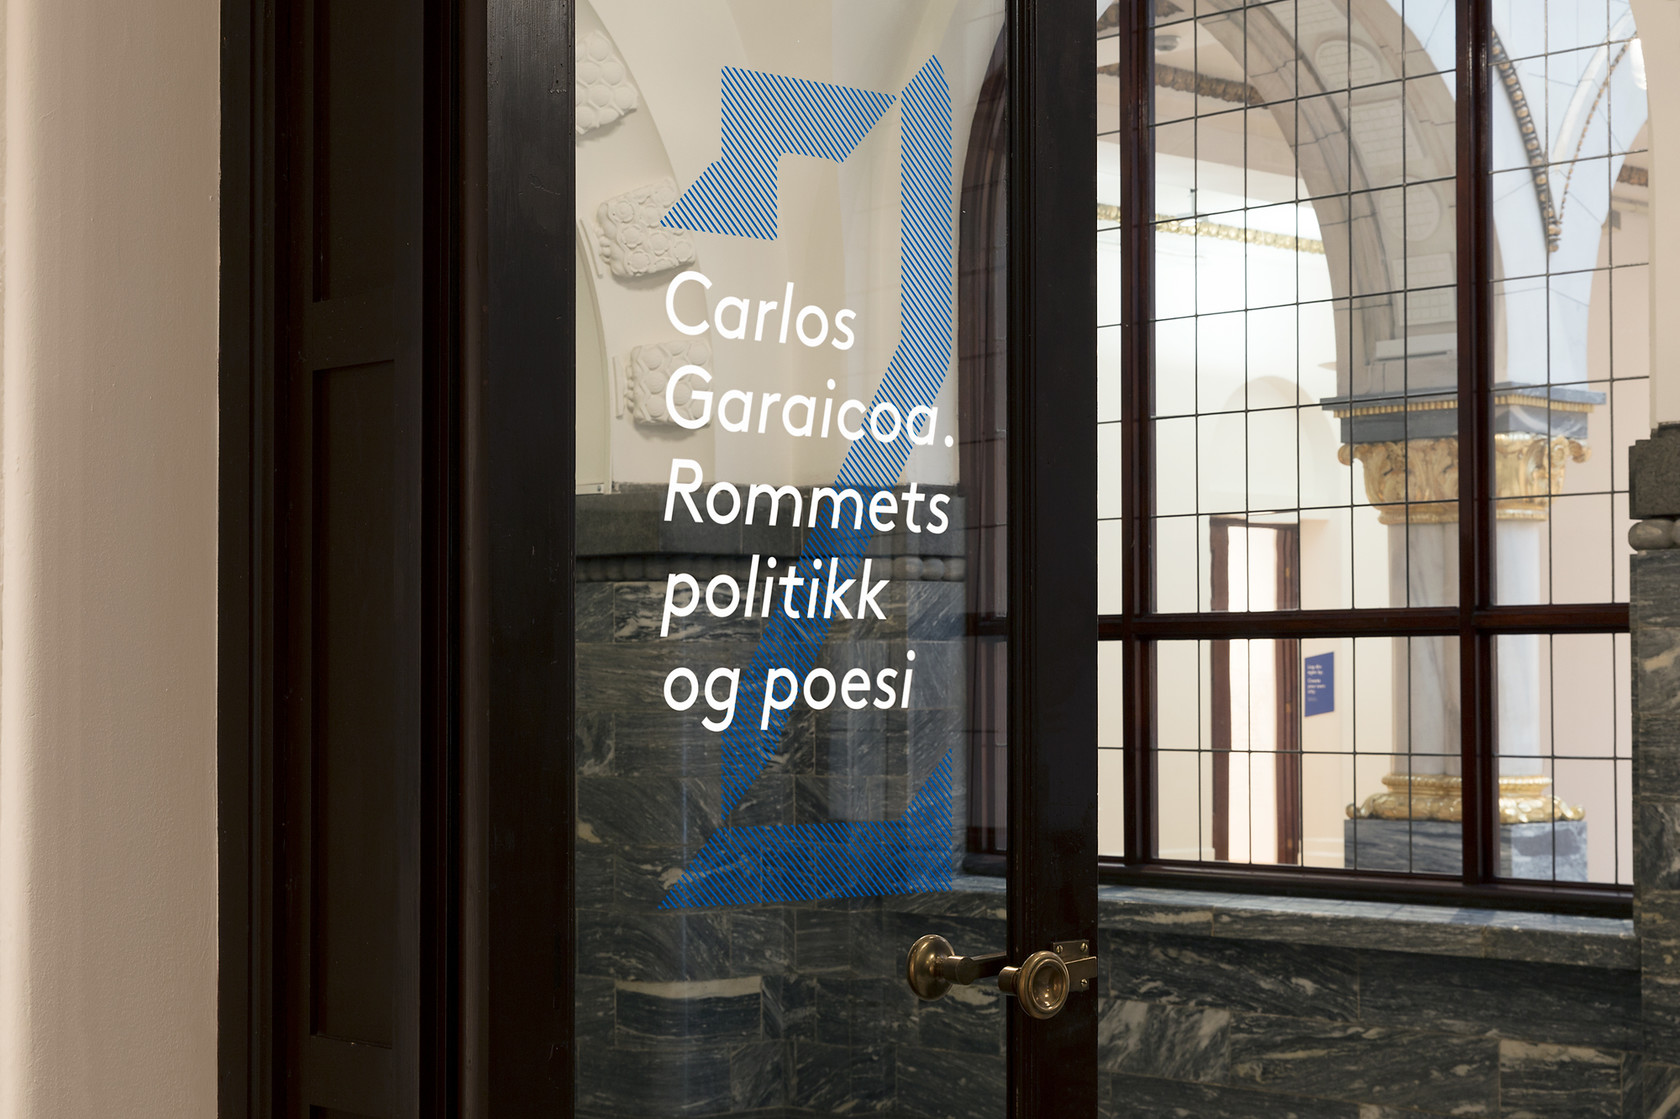 Exhibition graphic identity design by Norwegian studio Work In Progress for ‘Carlos Garaicoa, The Politics and Poetics of Space'